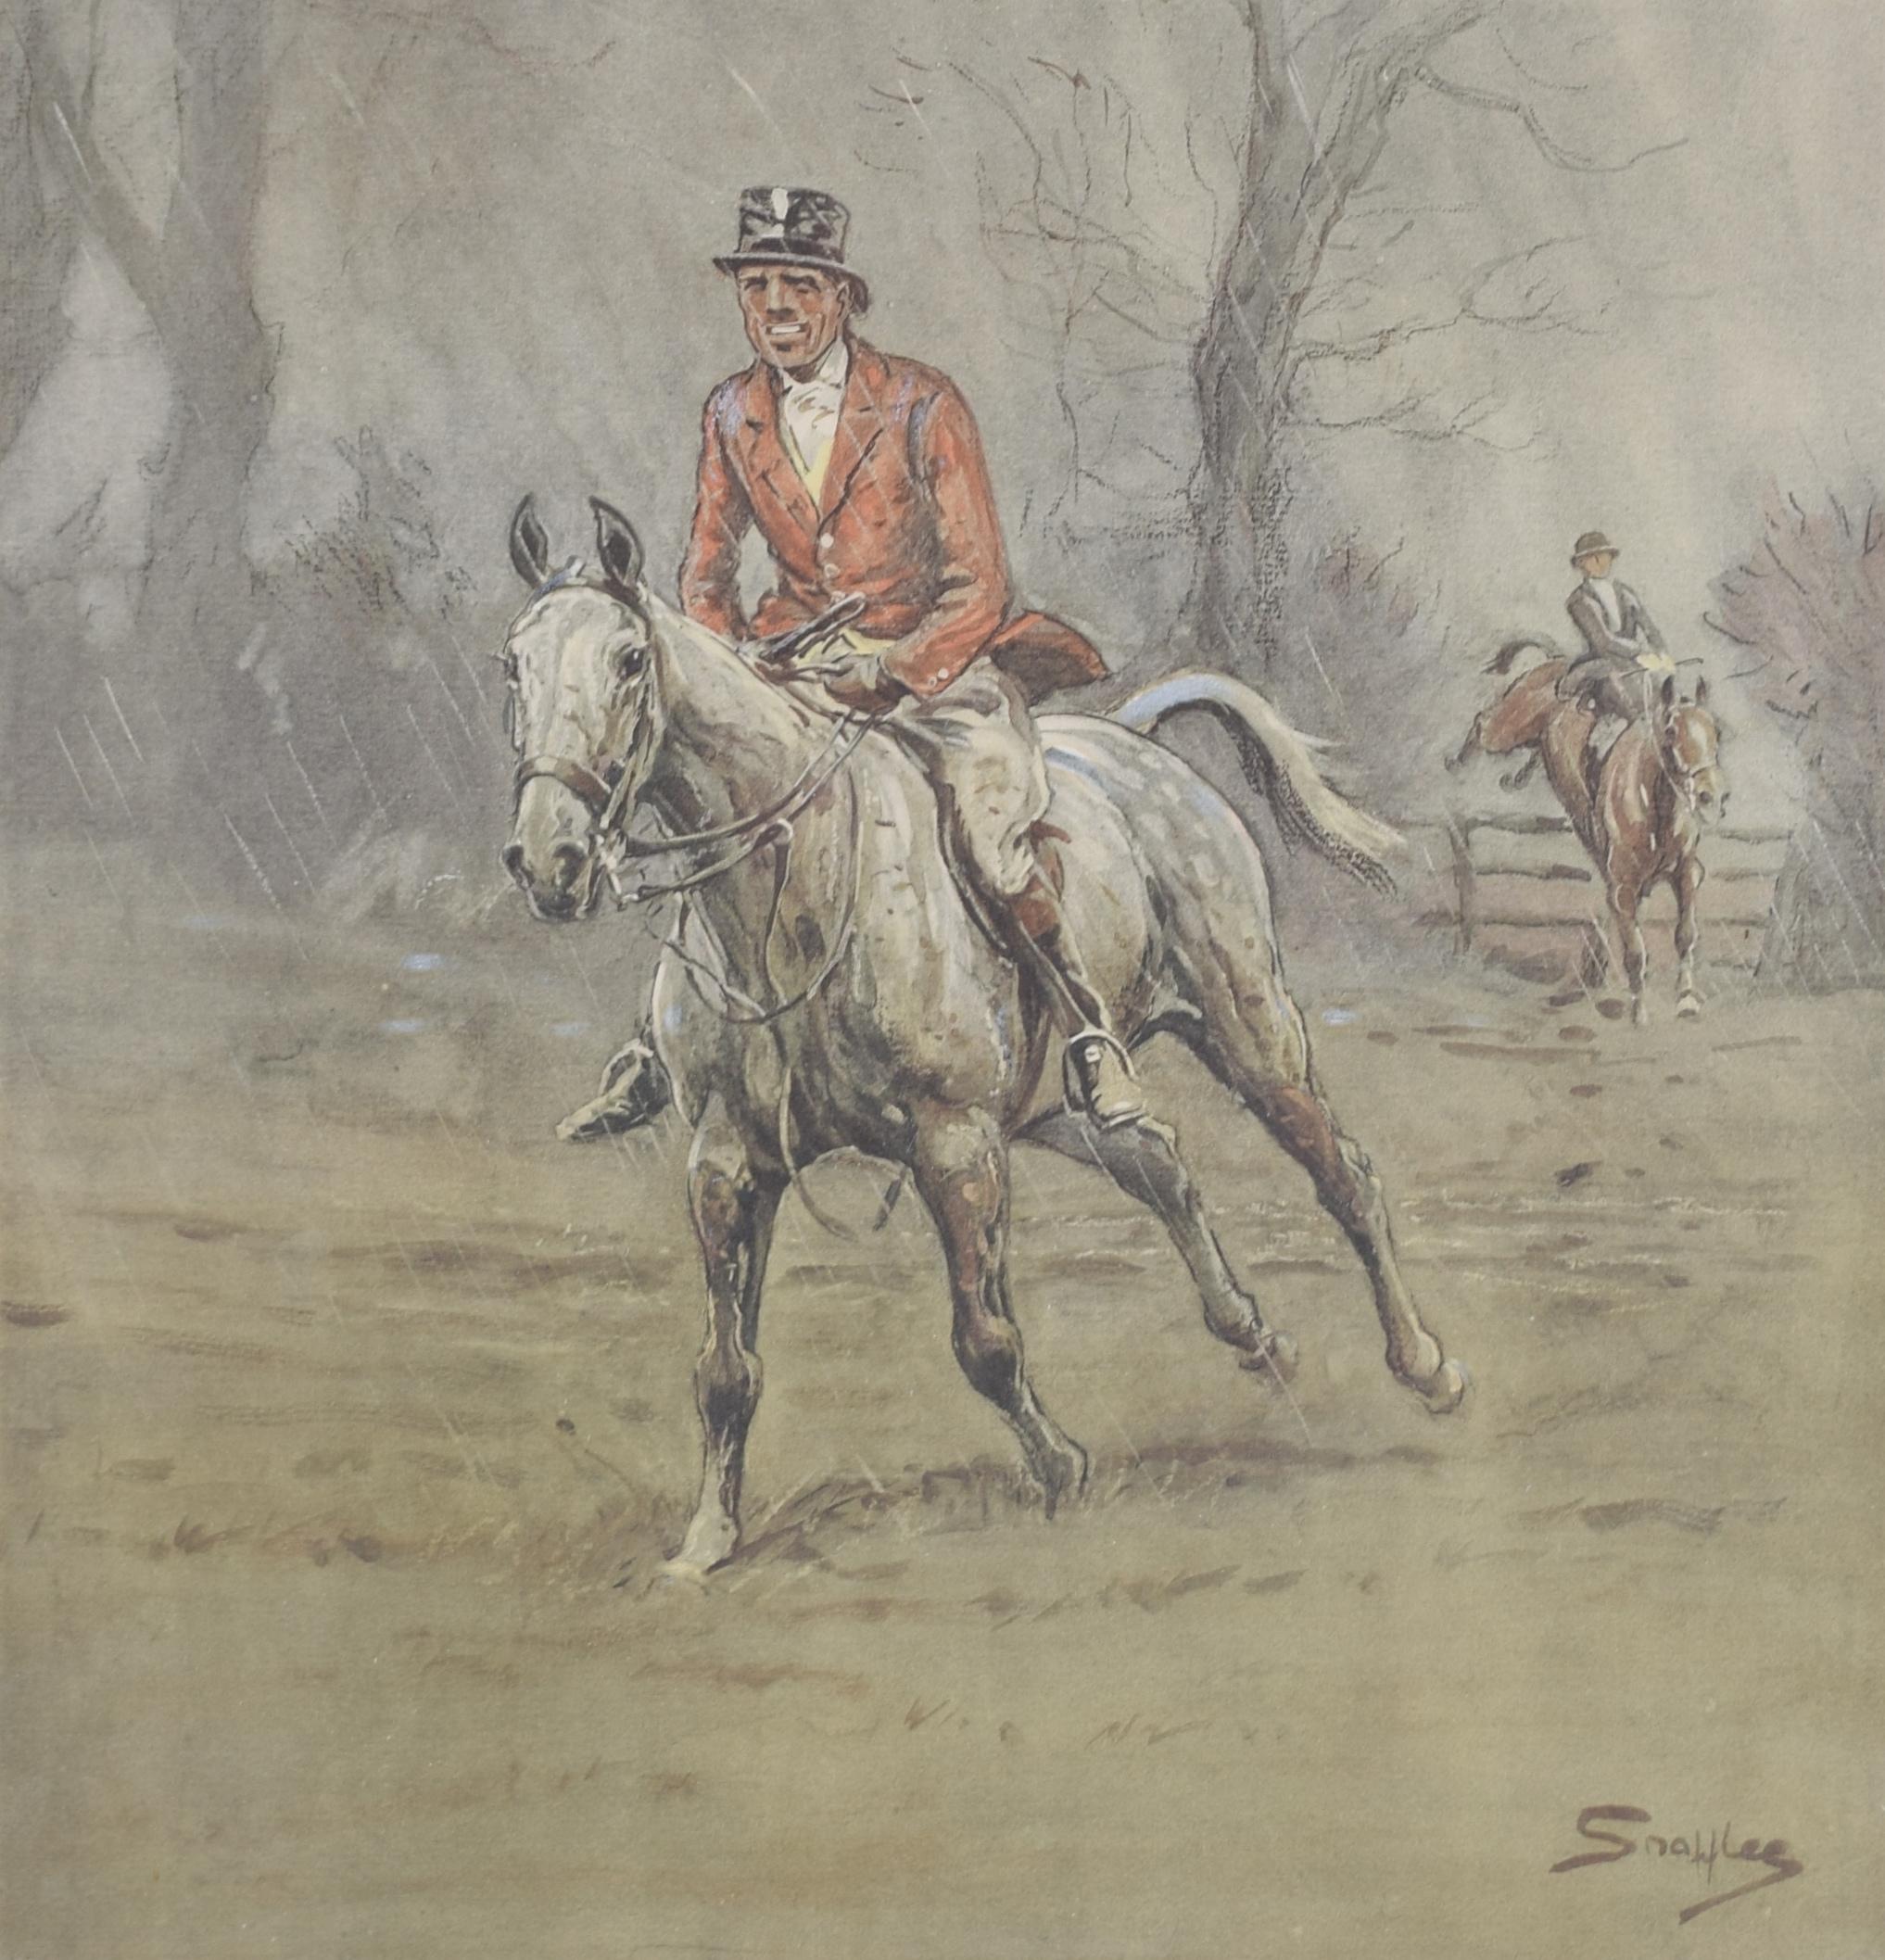 Impression de chasse au renard « Merry England and worth a guinea a minute » de Snaffles - Print de Charles 